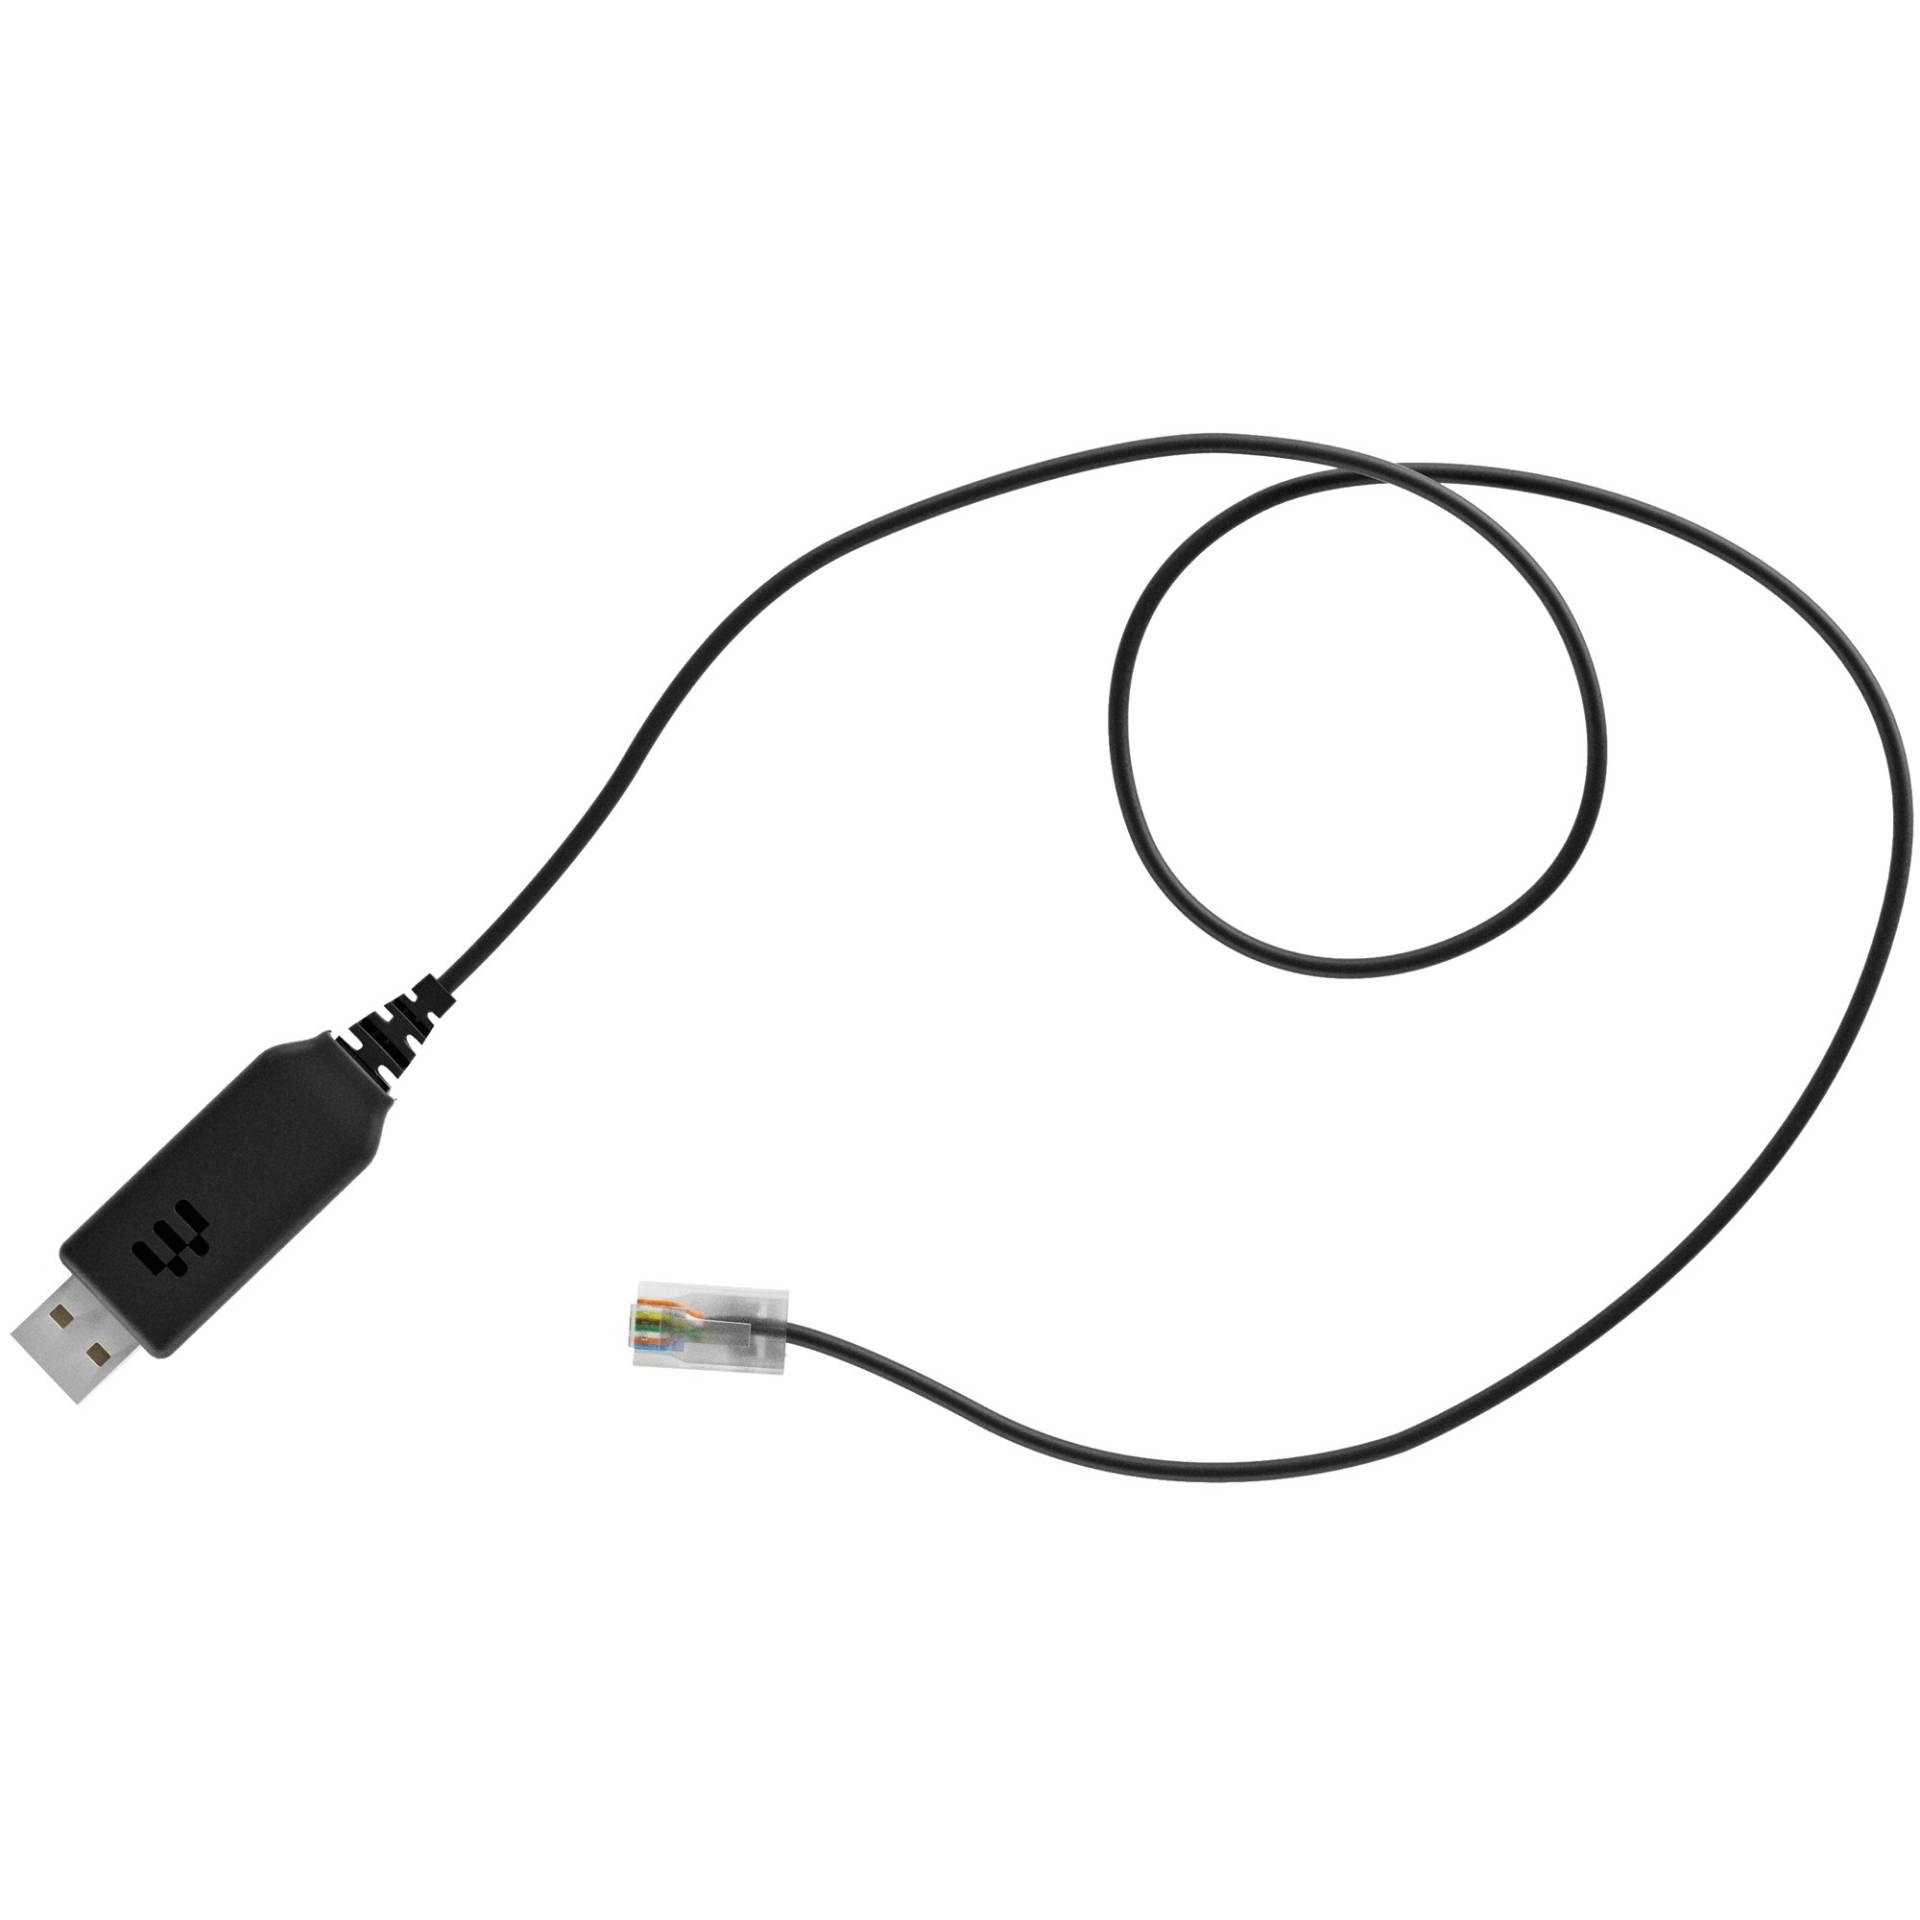 USB Adapterkabel CEHS-CI 02, USB-A Stecker > RJ-45 Stecker von EPOS | Sennheiser